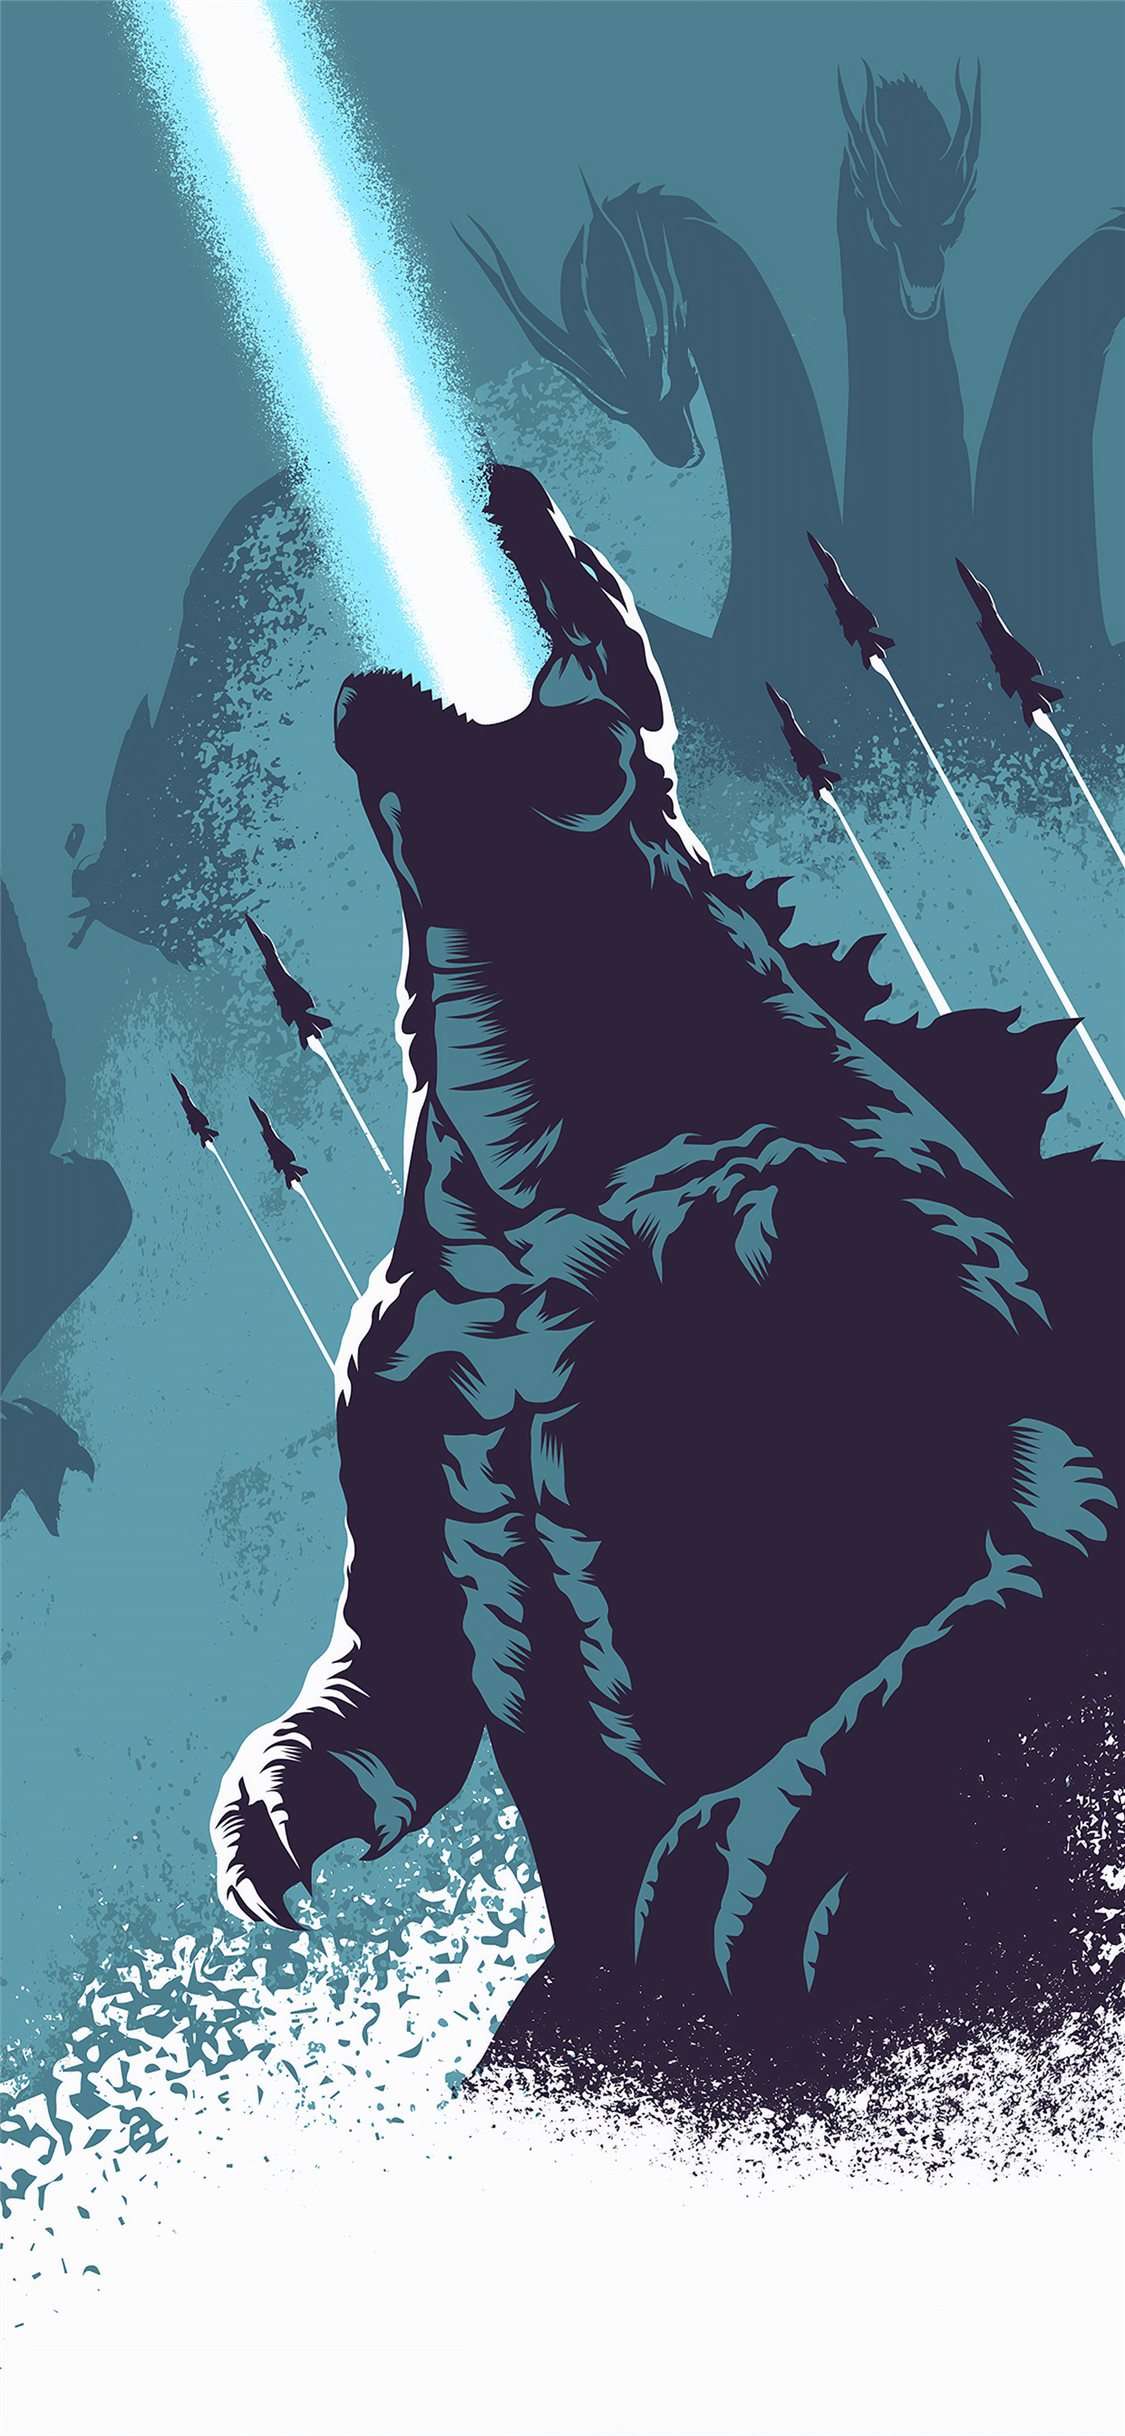 Godzilla Wallpaper iPhone Xrwalpaperlist.com